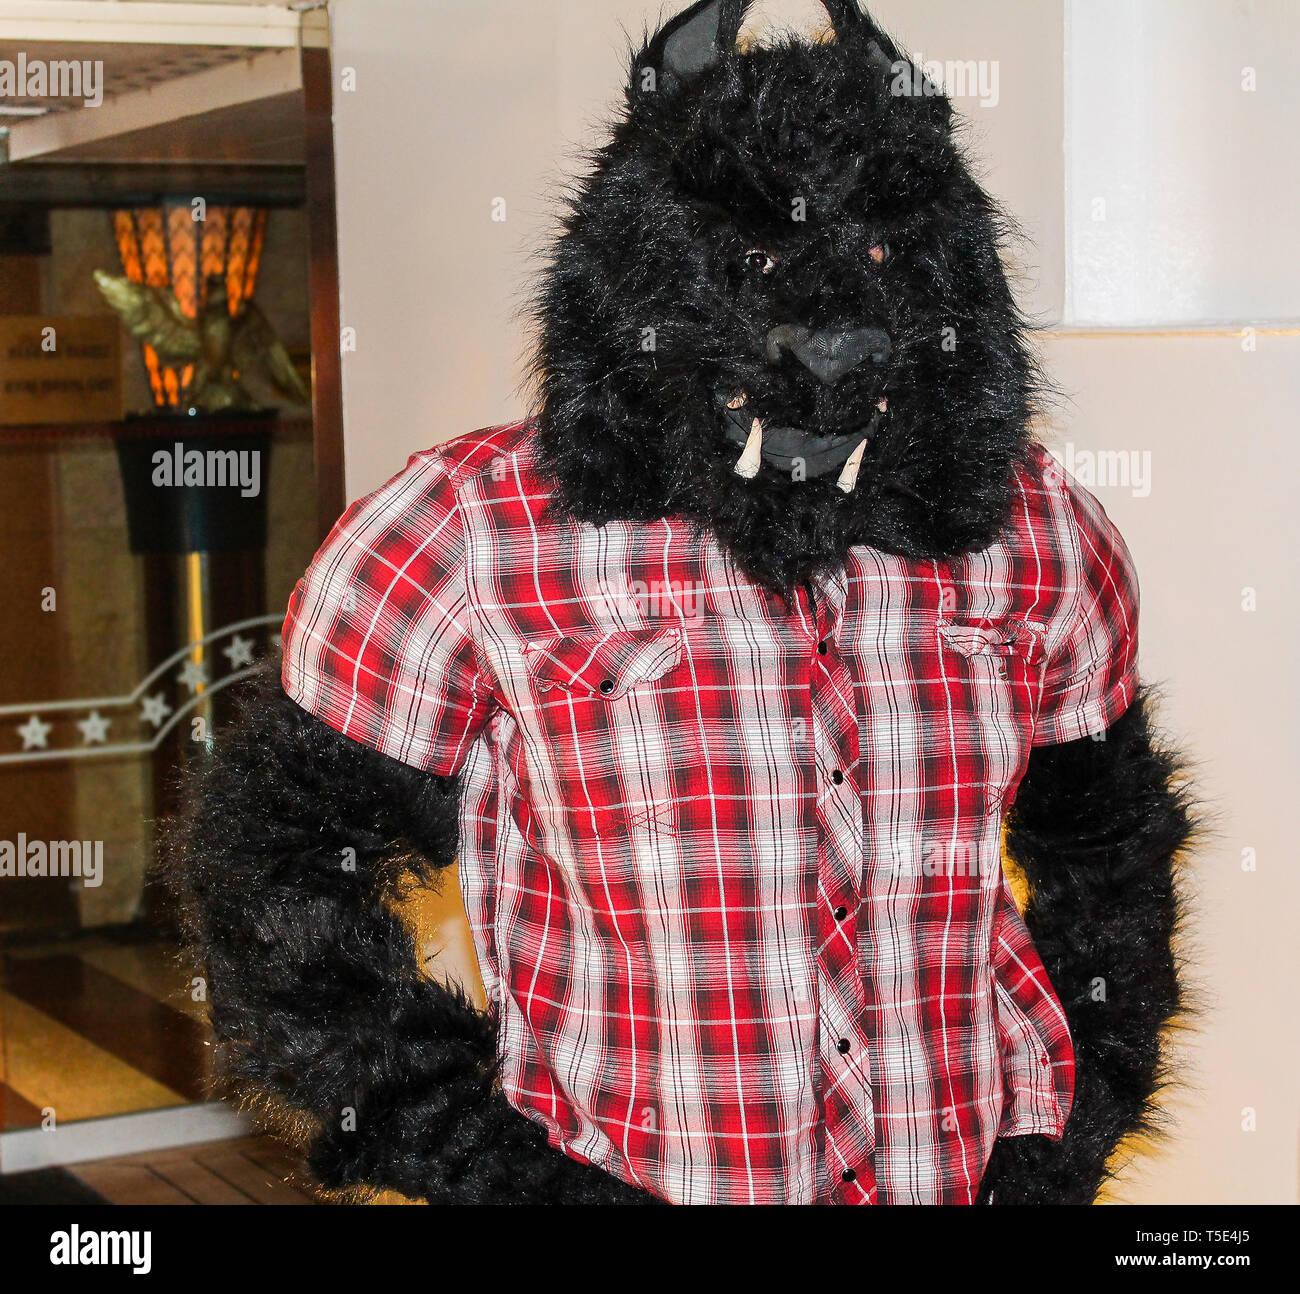 Un lupo mannaro costume per Halloween o carnevale Foto stock - Alamy